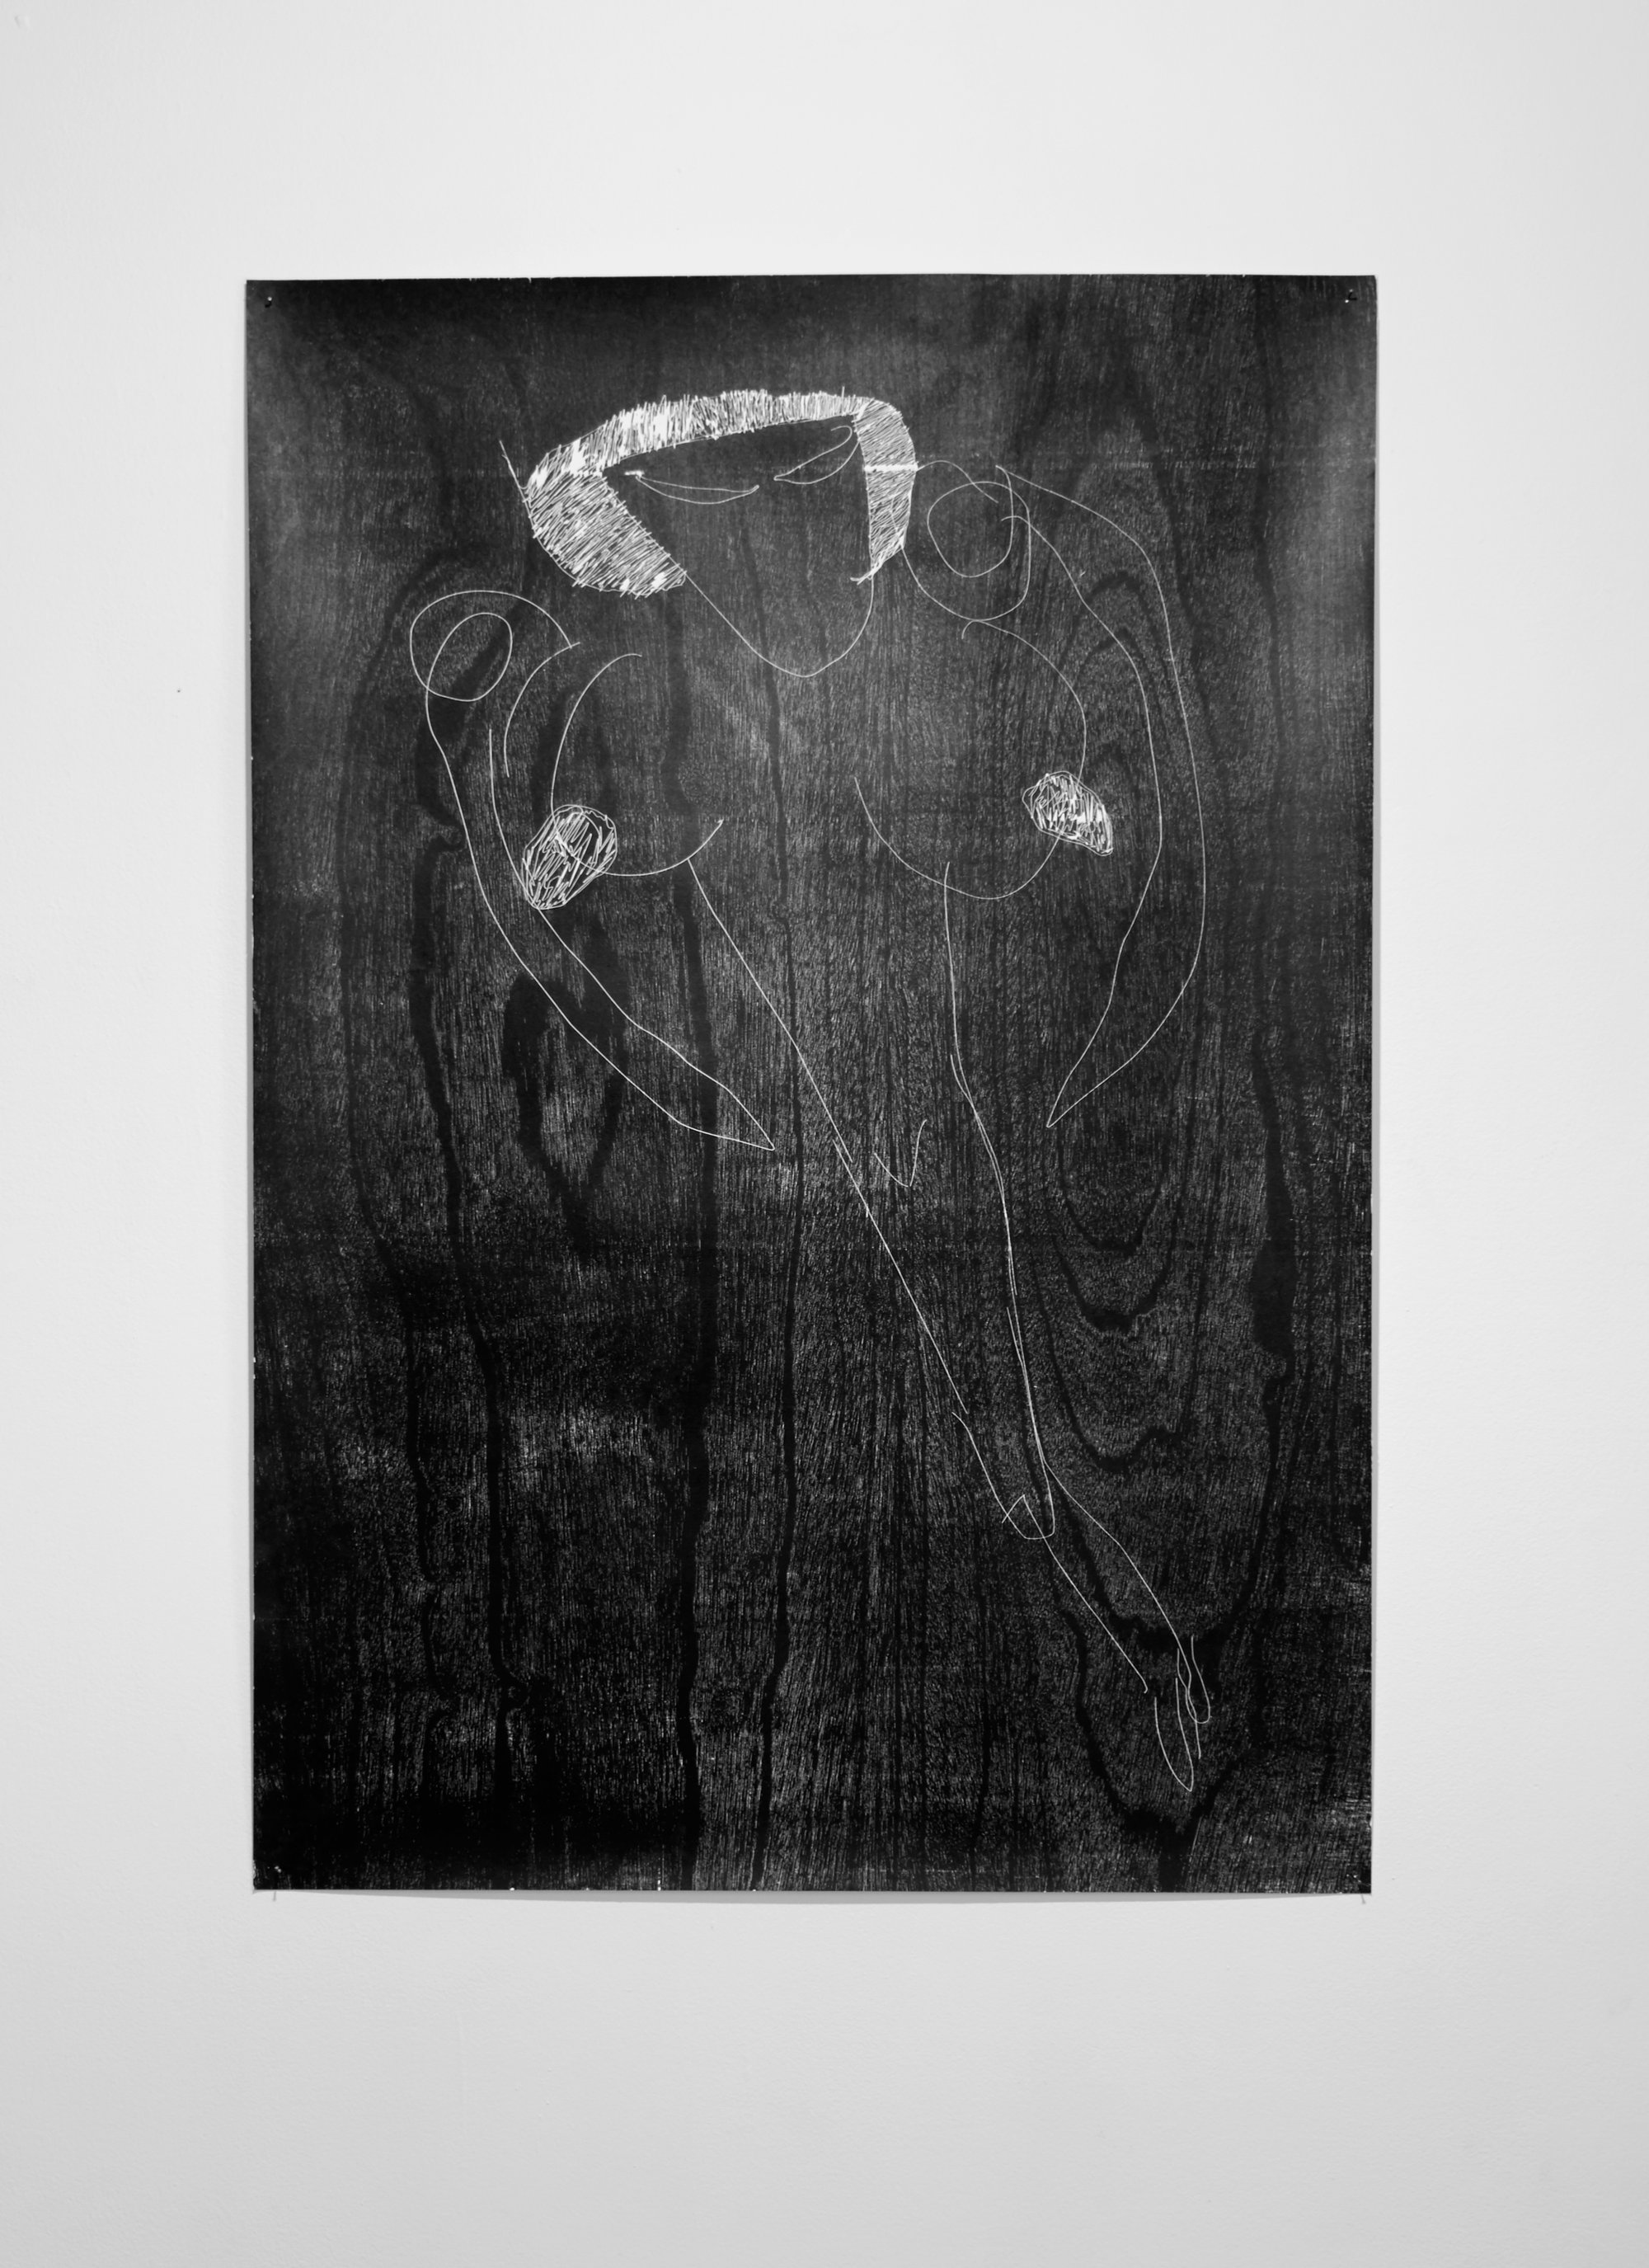 Sidsel Meineche Hansen, Bad feminist anti-hero, laser woodcut on paper, mounted on aluminium under museum glass, 135.3 x 79.8 cm, 2016